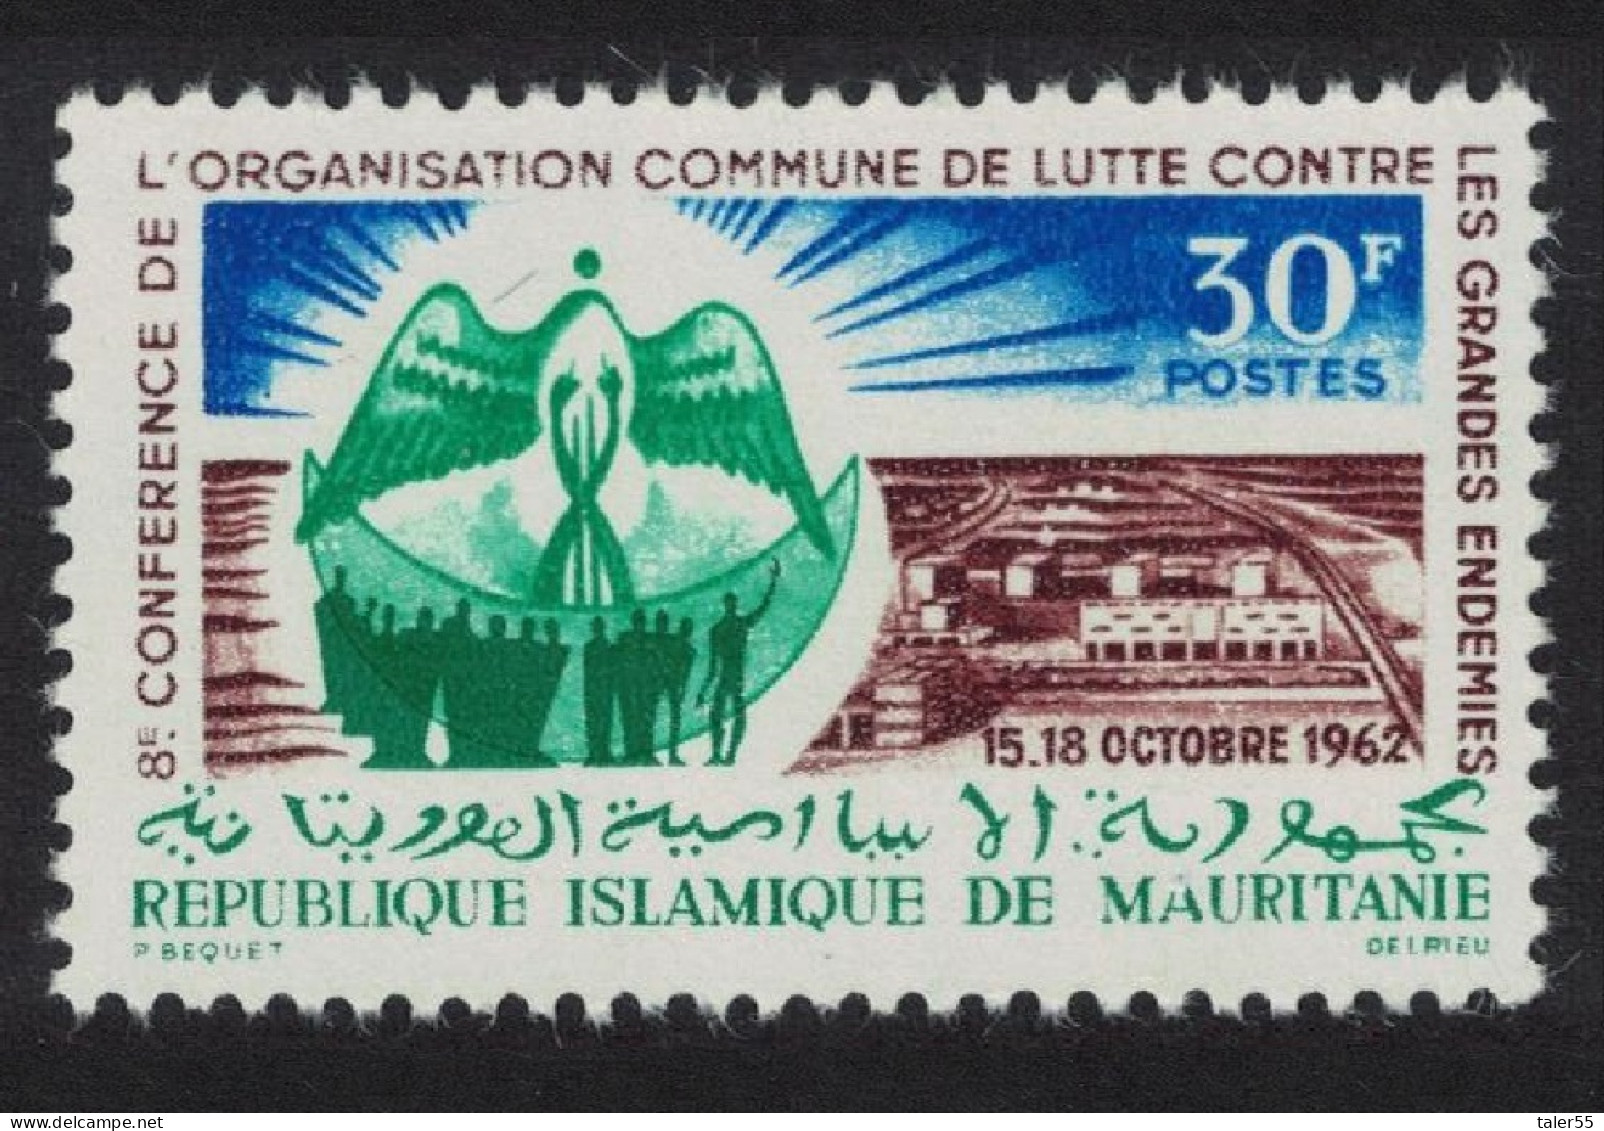 Mauritania Endemic Diseases Eradication 1962 MNH SG#156 MI#195 - Mauretanien (1960-...)